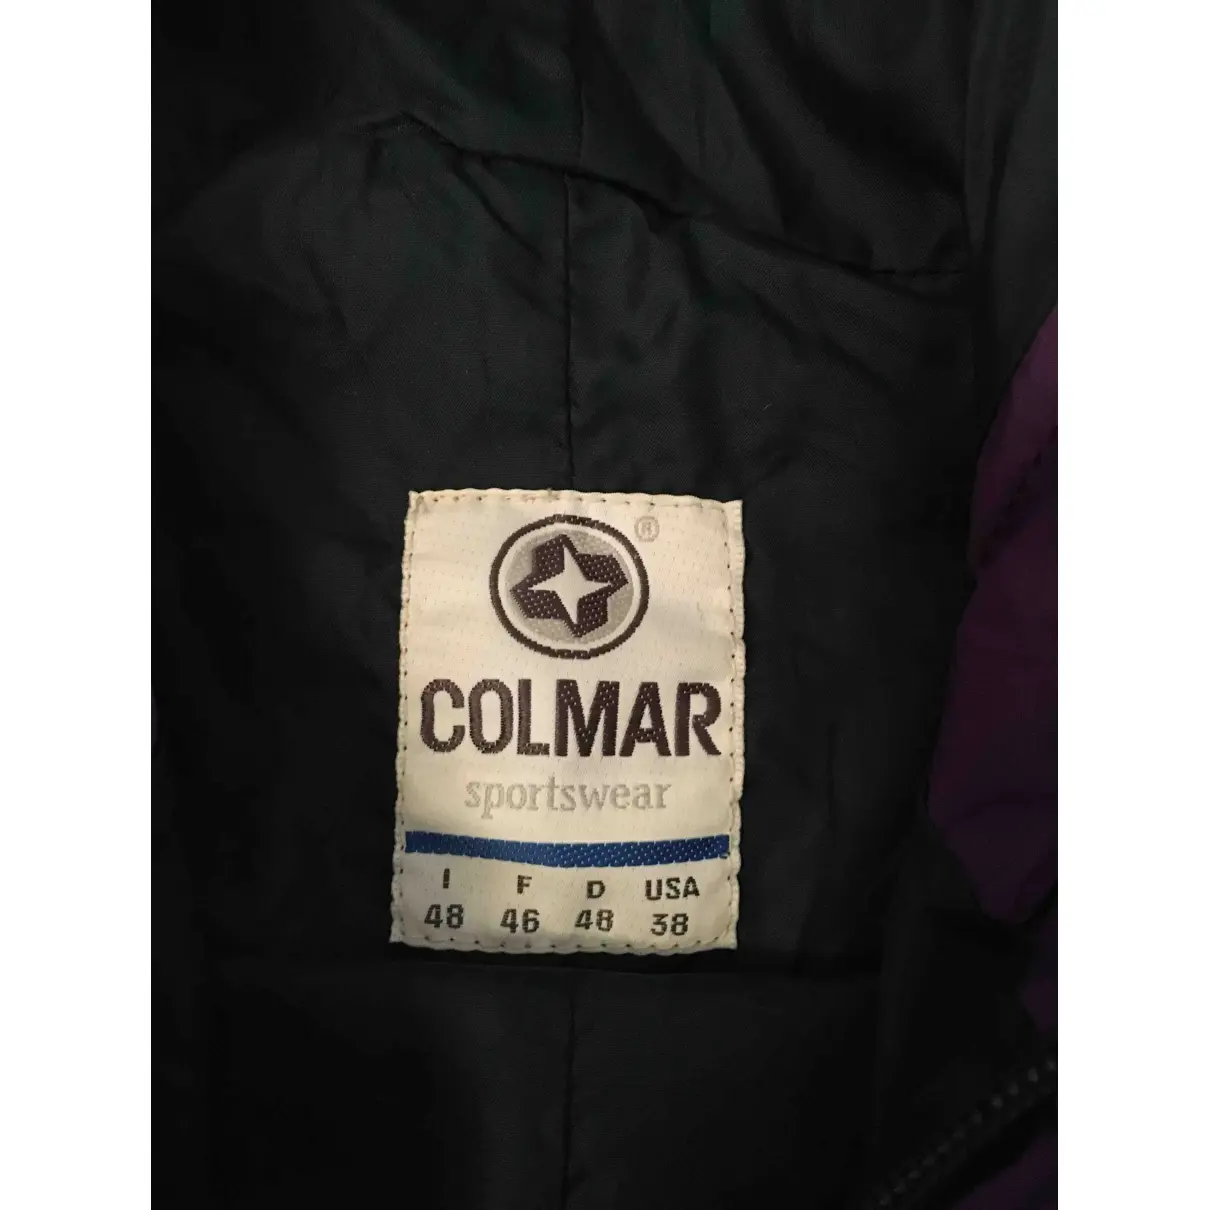 Buy Colmar Jacket online